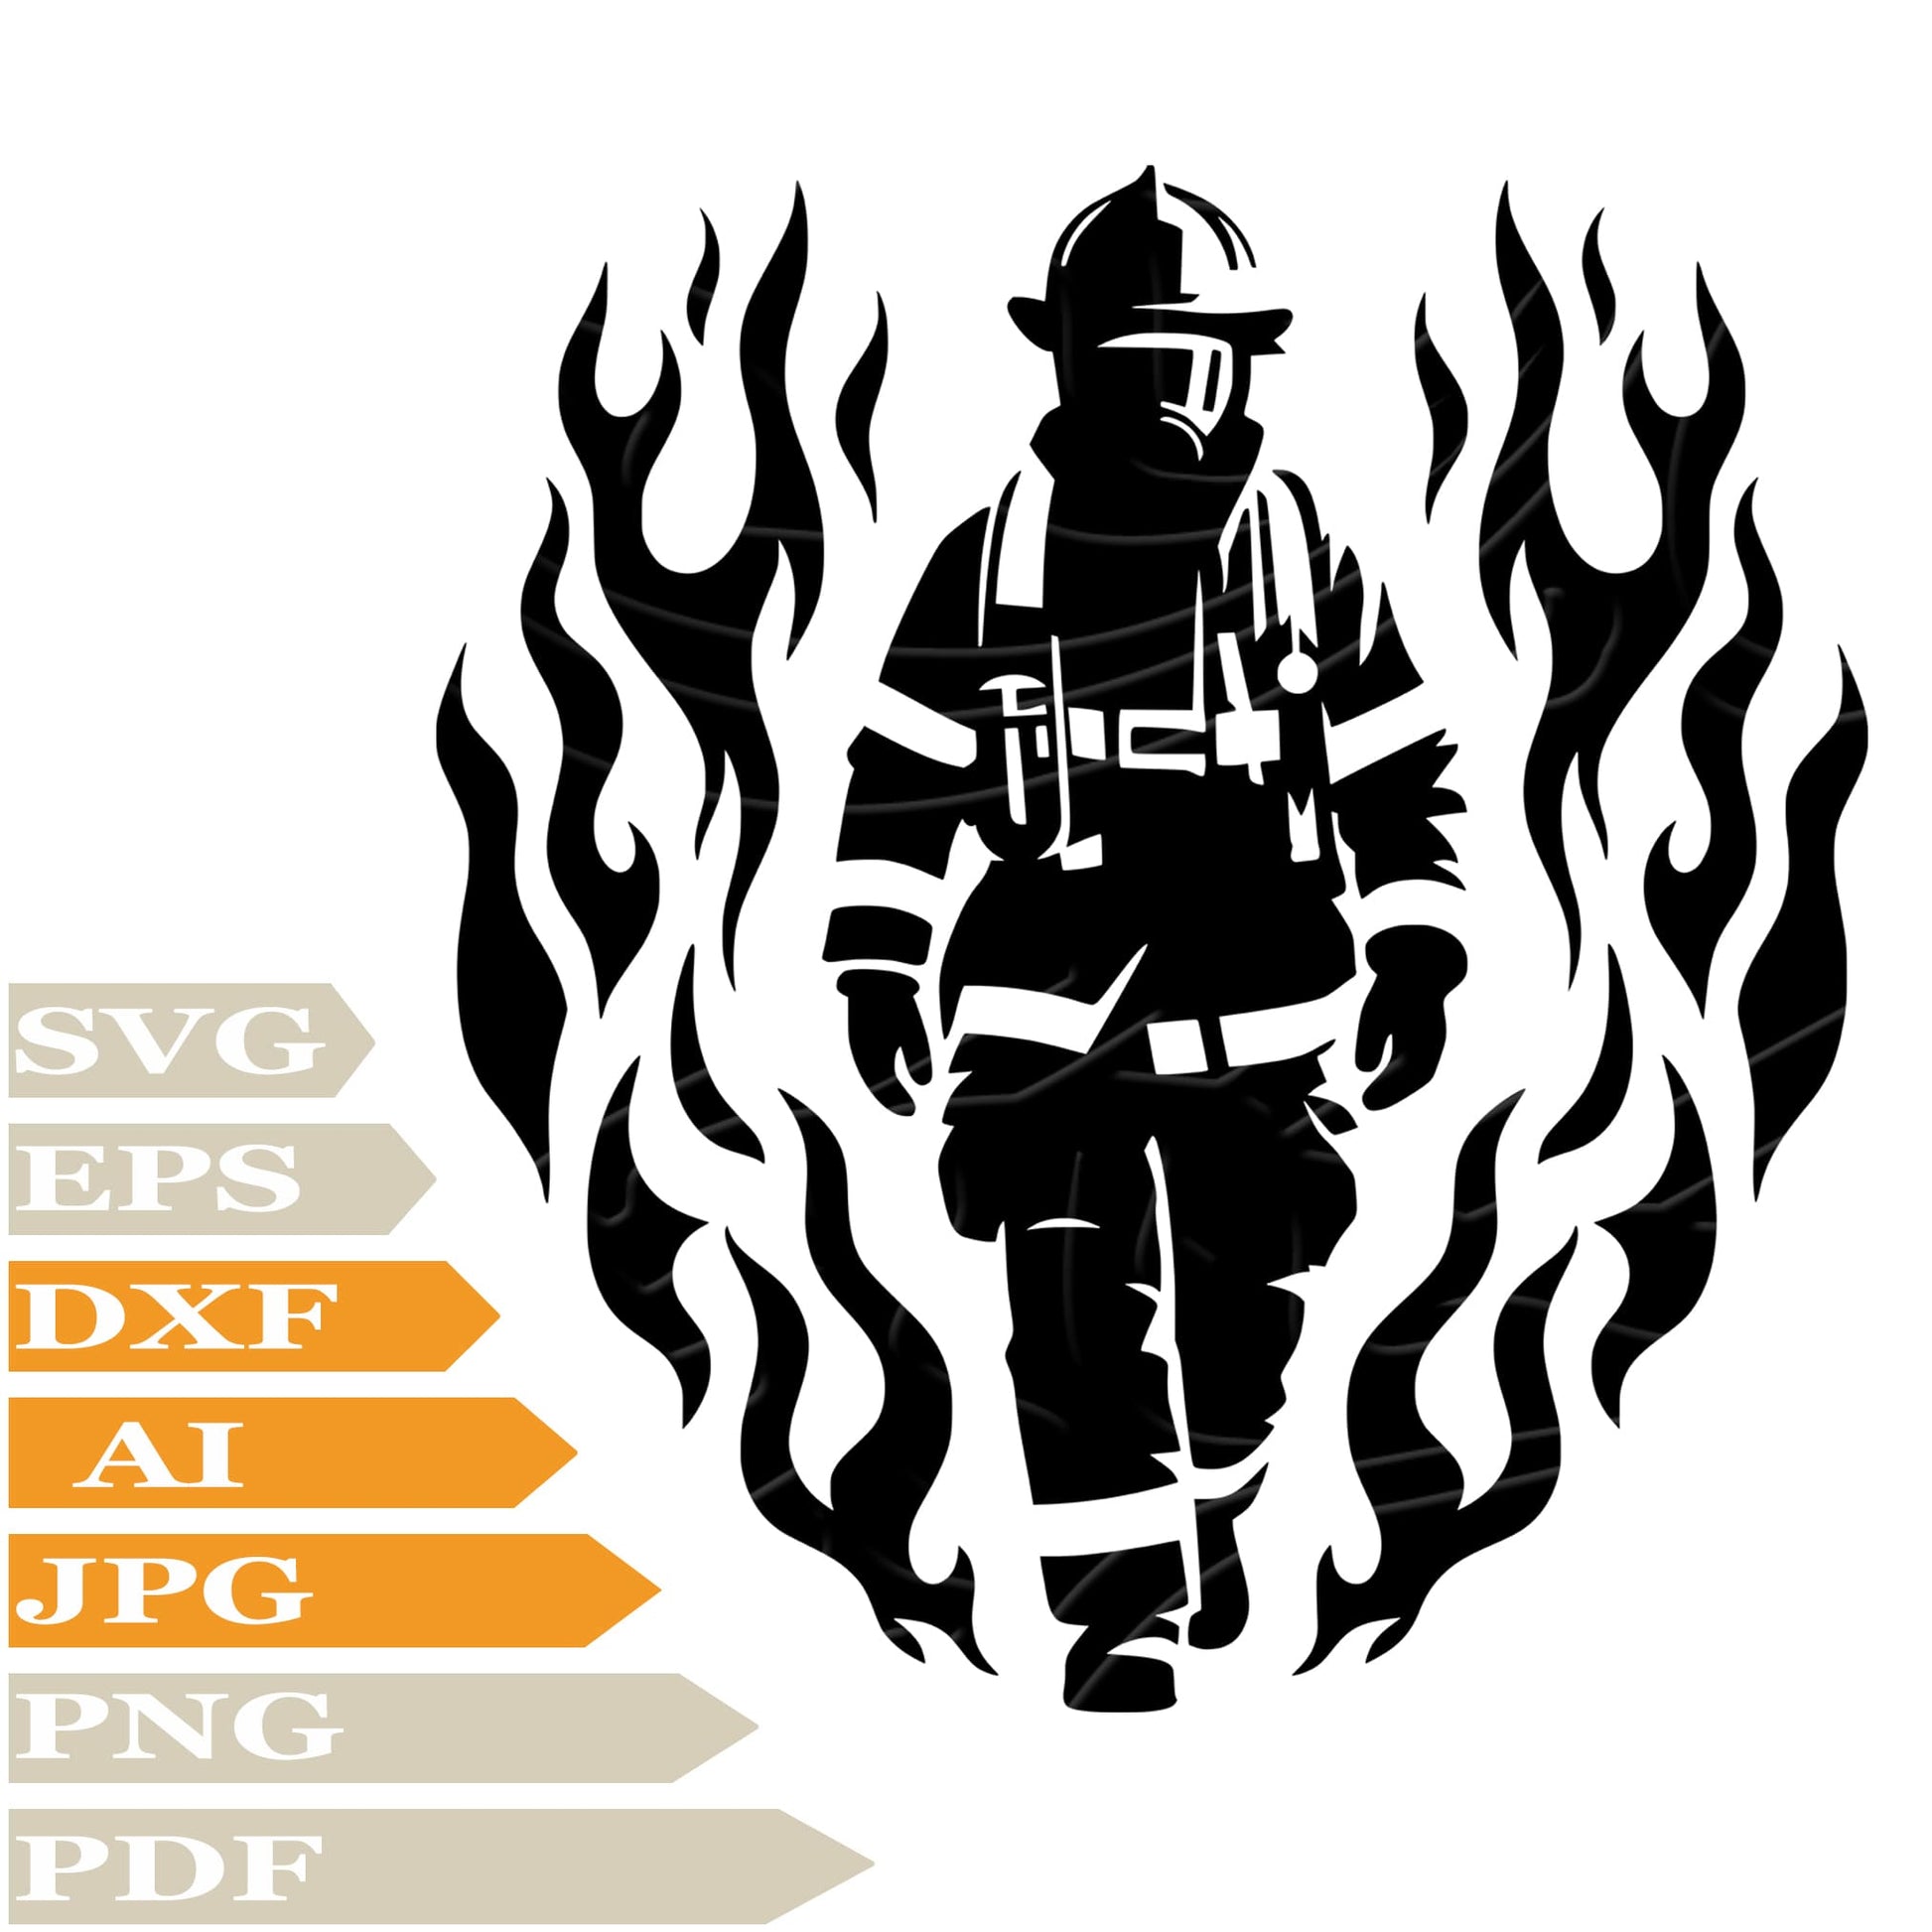 Firefighter ﻿SVG, Fireman On Fire SVG Design, Brave Fireman PNG, Firefighter Vector Graphics, Fireman On Fire For Cricut, Digital Instant Download, Clip Art, Cut File, T-Shirts, Silhouette